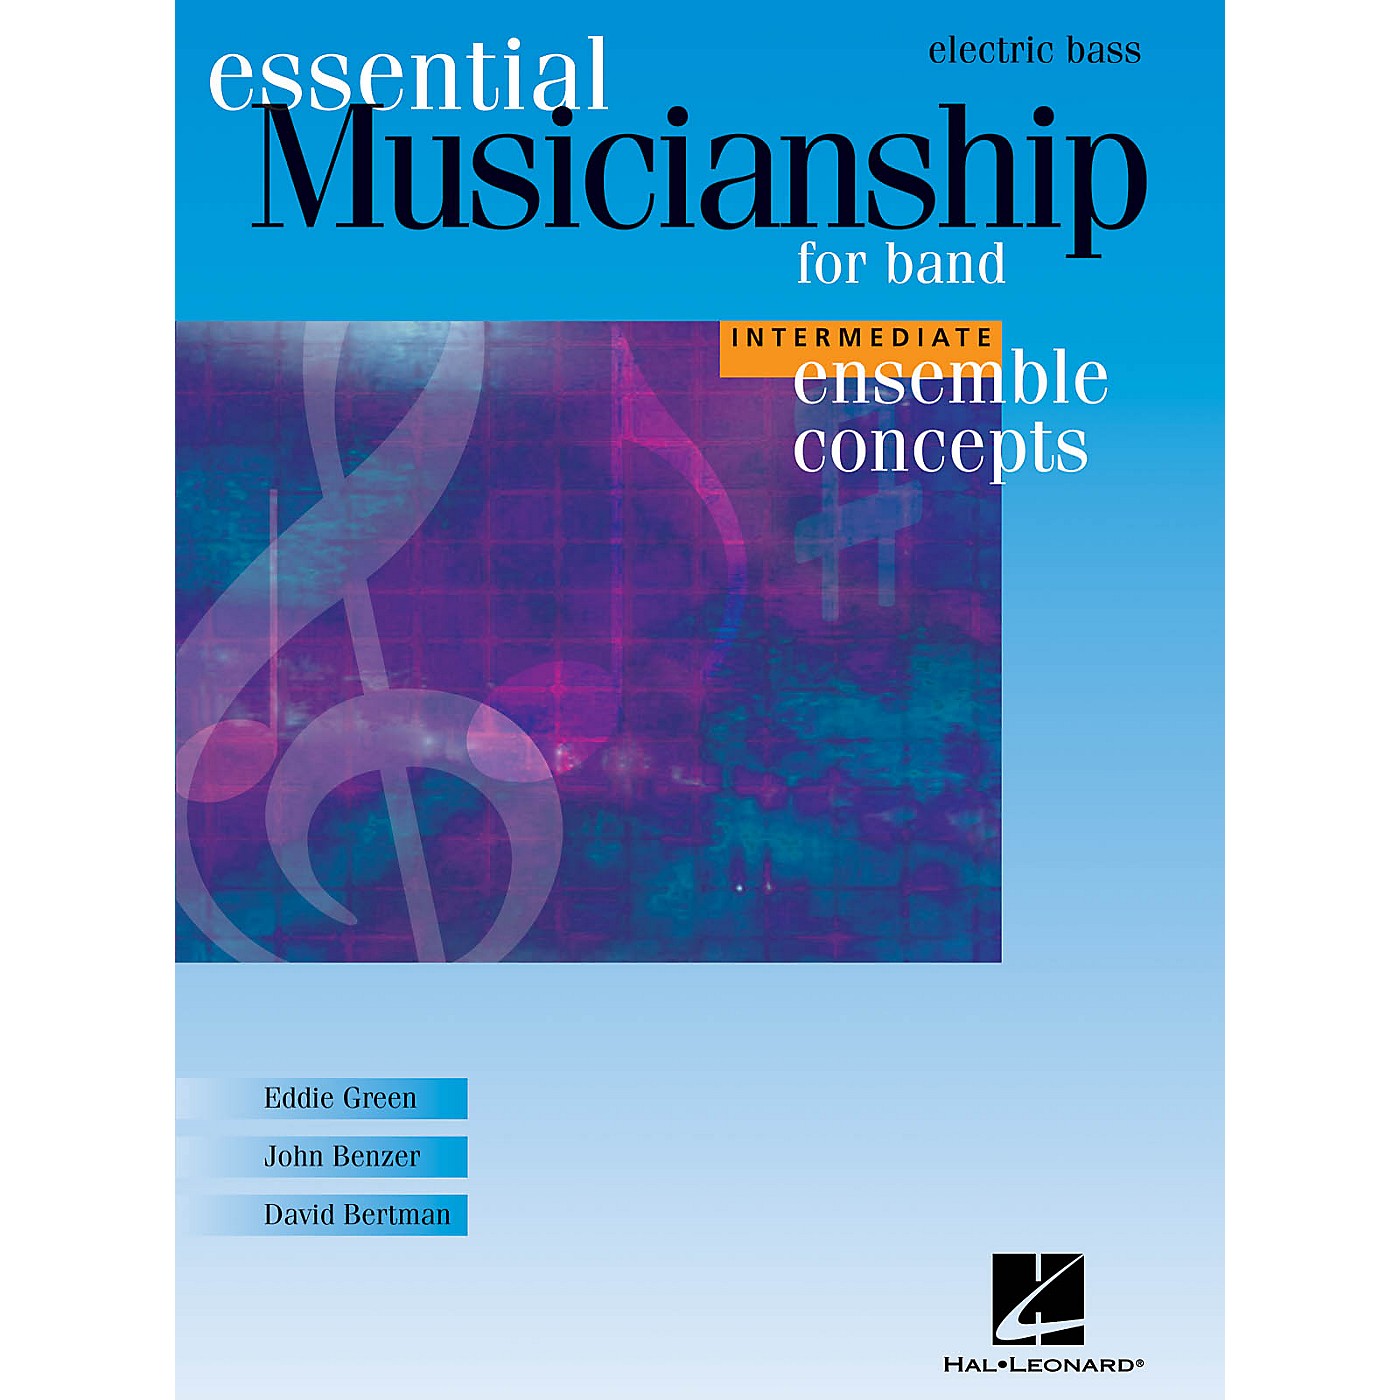 Hal Leonard Essential Musicianship for Band - Ensemble Concepts (Intermediate Level - Electric Bass) Concert Band thumbnail